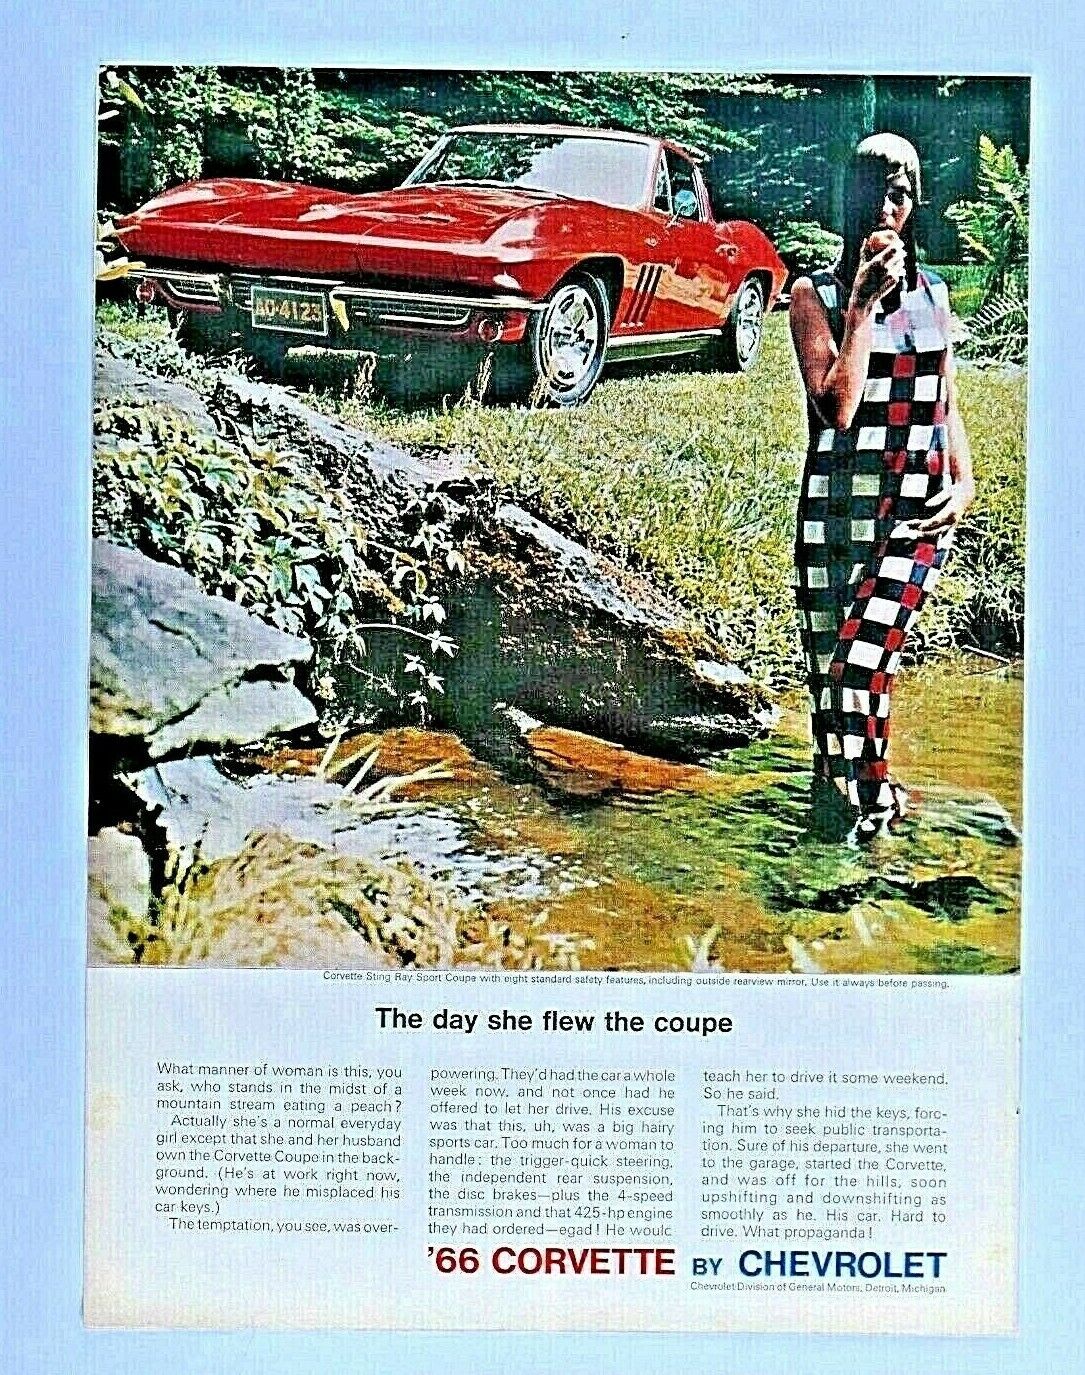 1966 Chevrolet Corvette Vintage Day She Flew The Coupe Original Print Ad 8.5x11\